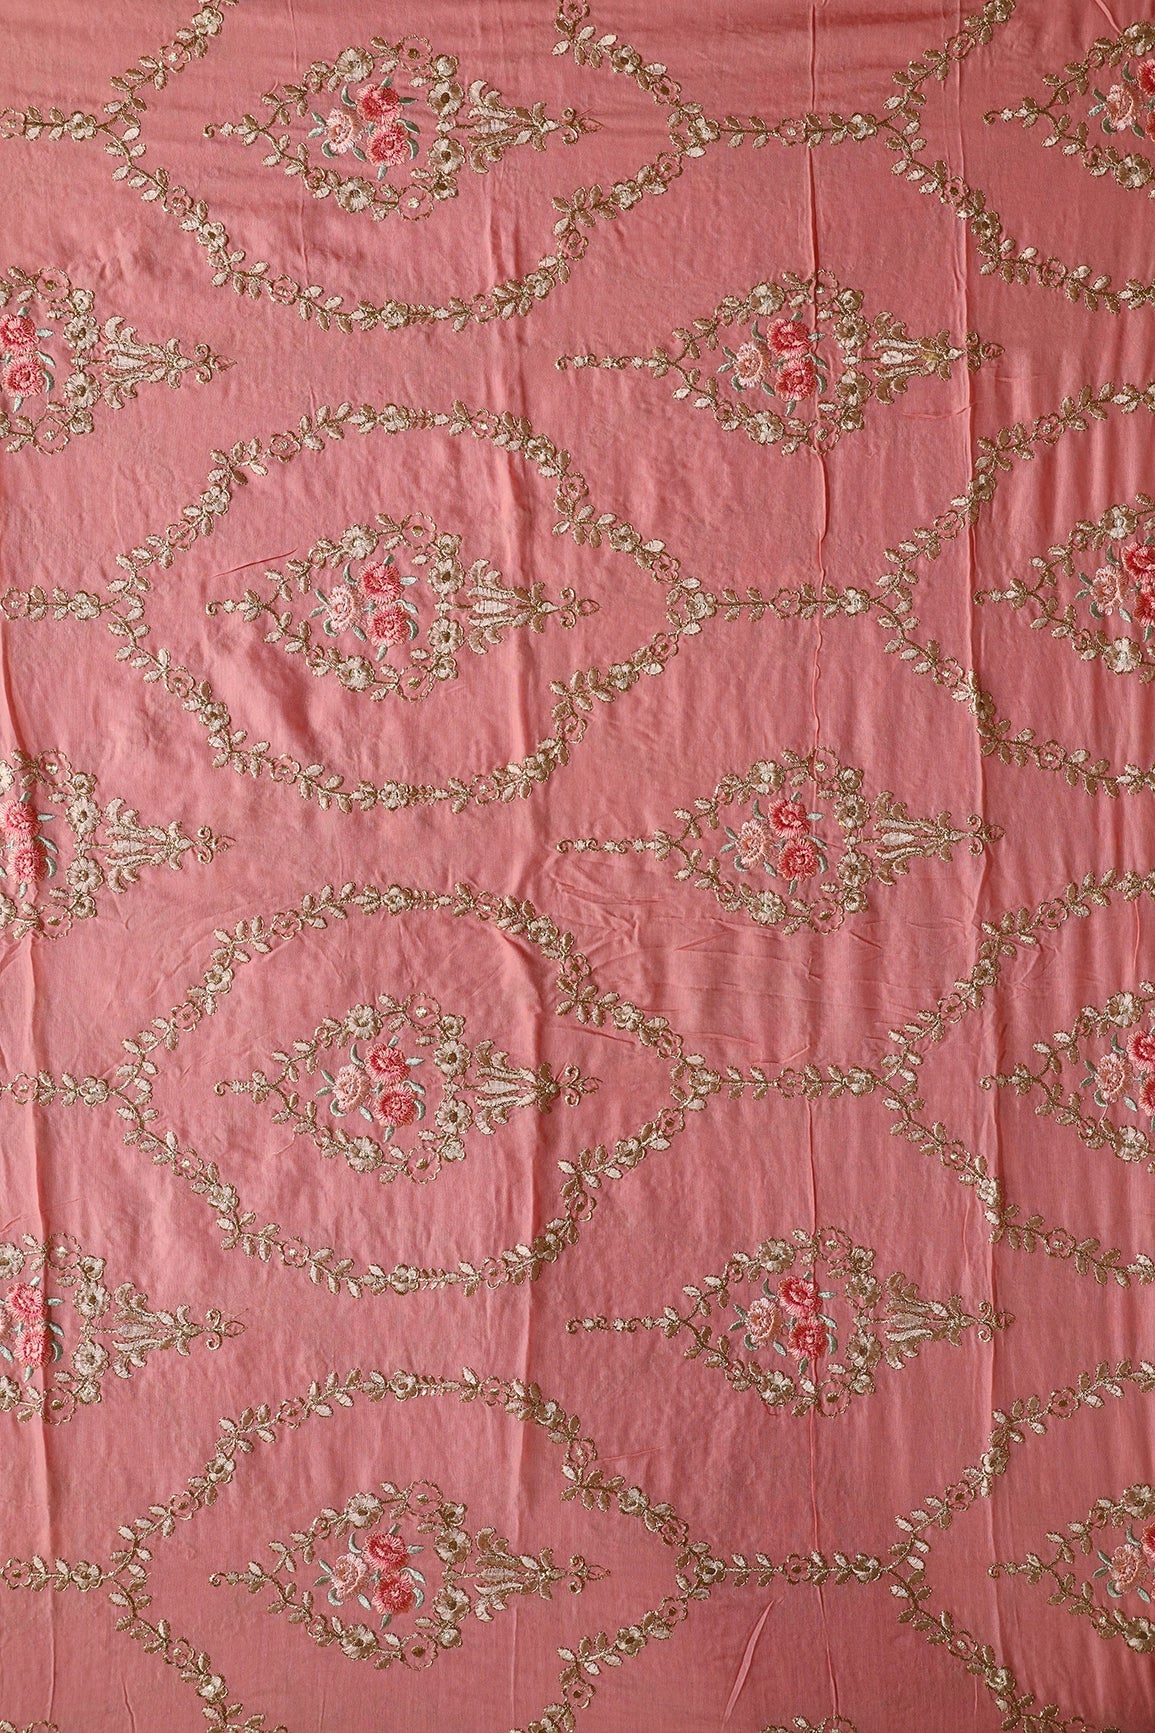 2 Meter Cut Piece Of Beige Thread With Gold Zari Mughal Floral Embroidery On Peach Muslin Silk Fabric